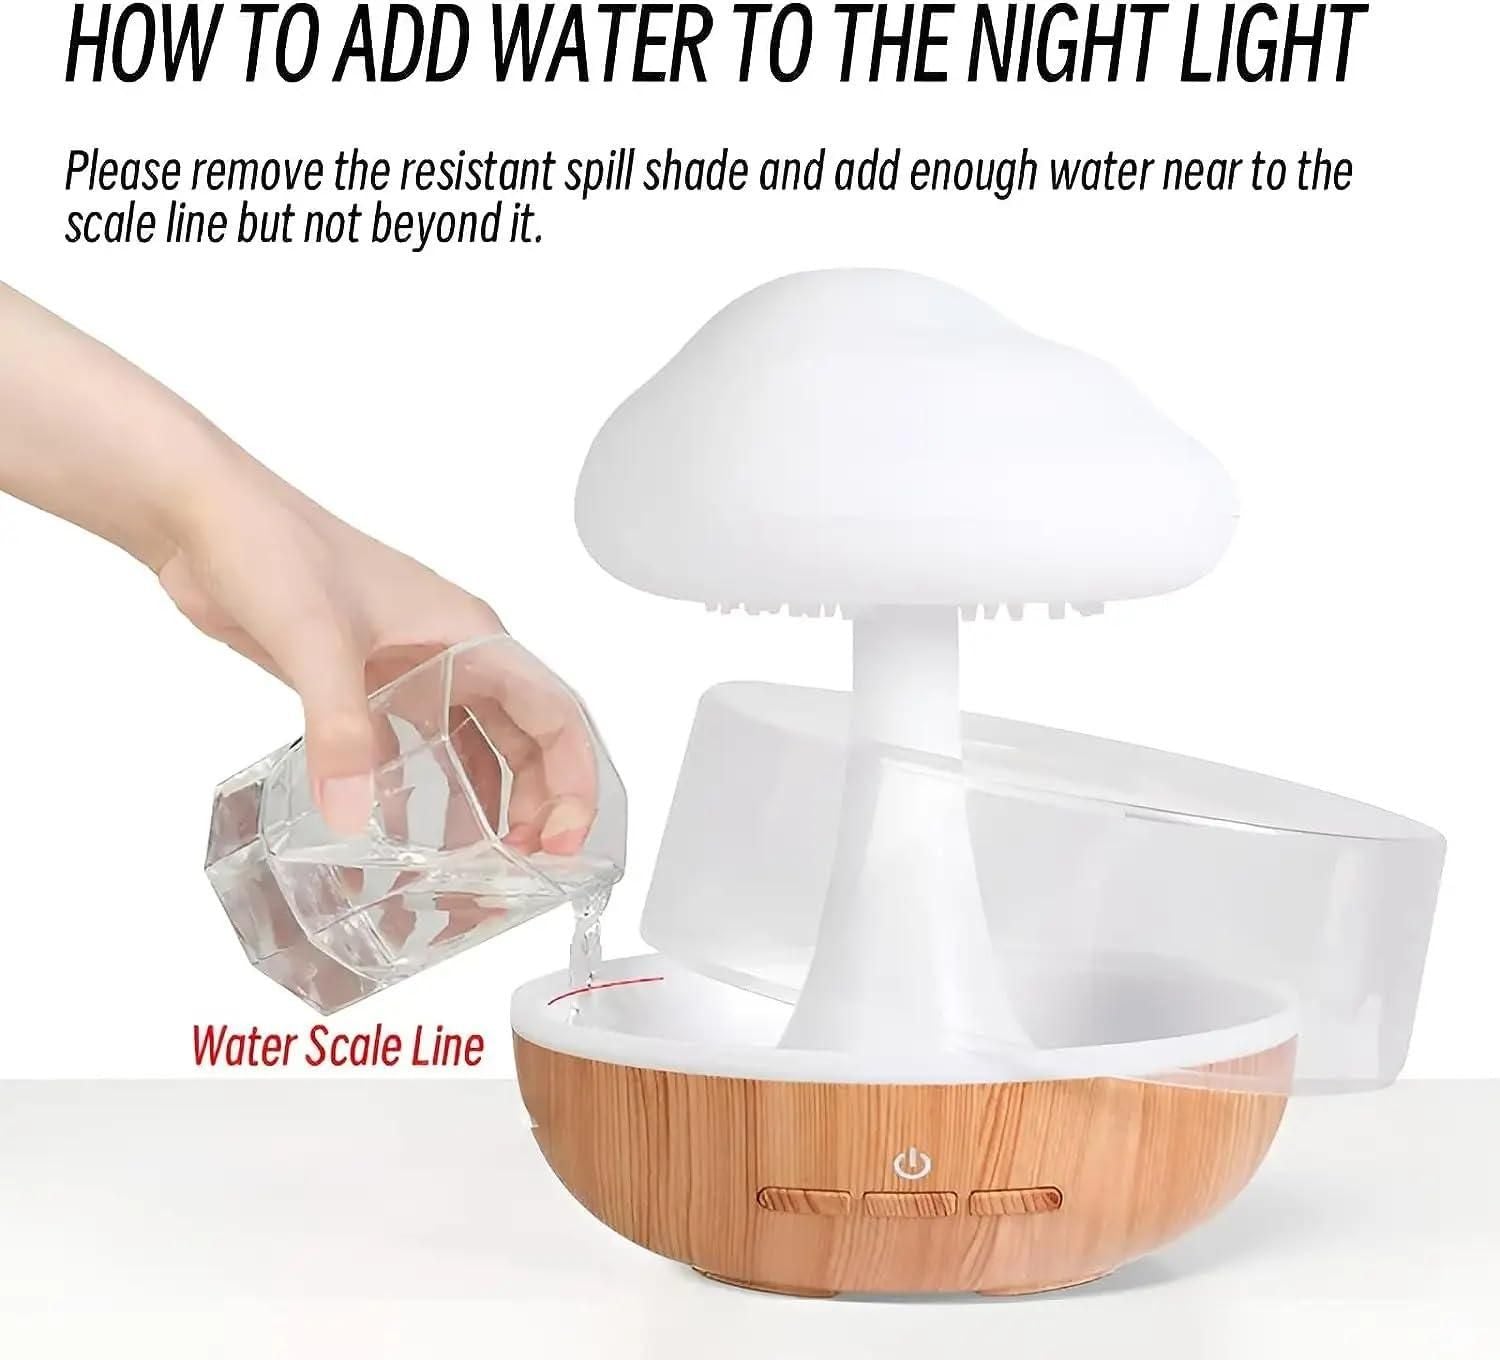 WERSSATILE  Raining Cloud Night Light Micro Humidifier Diffuser